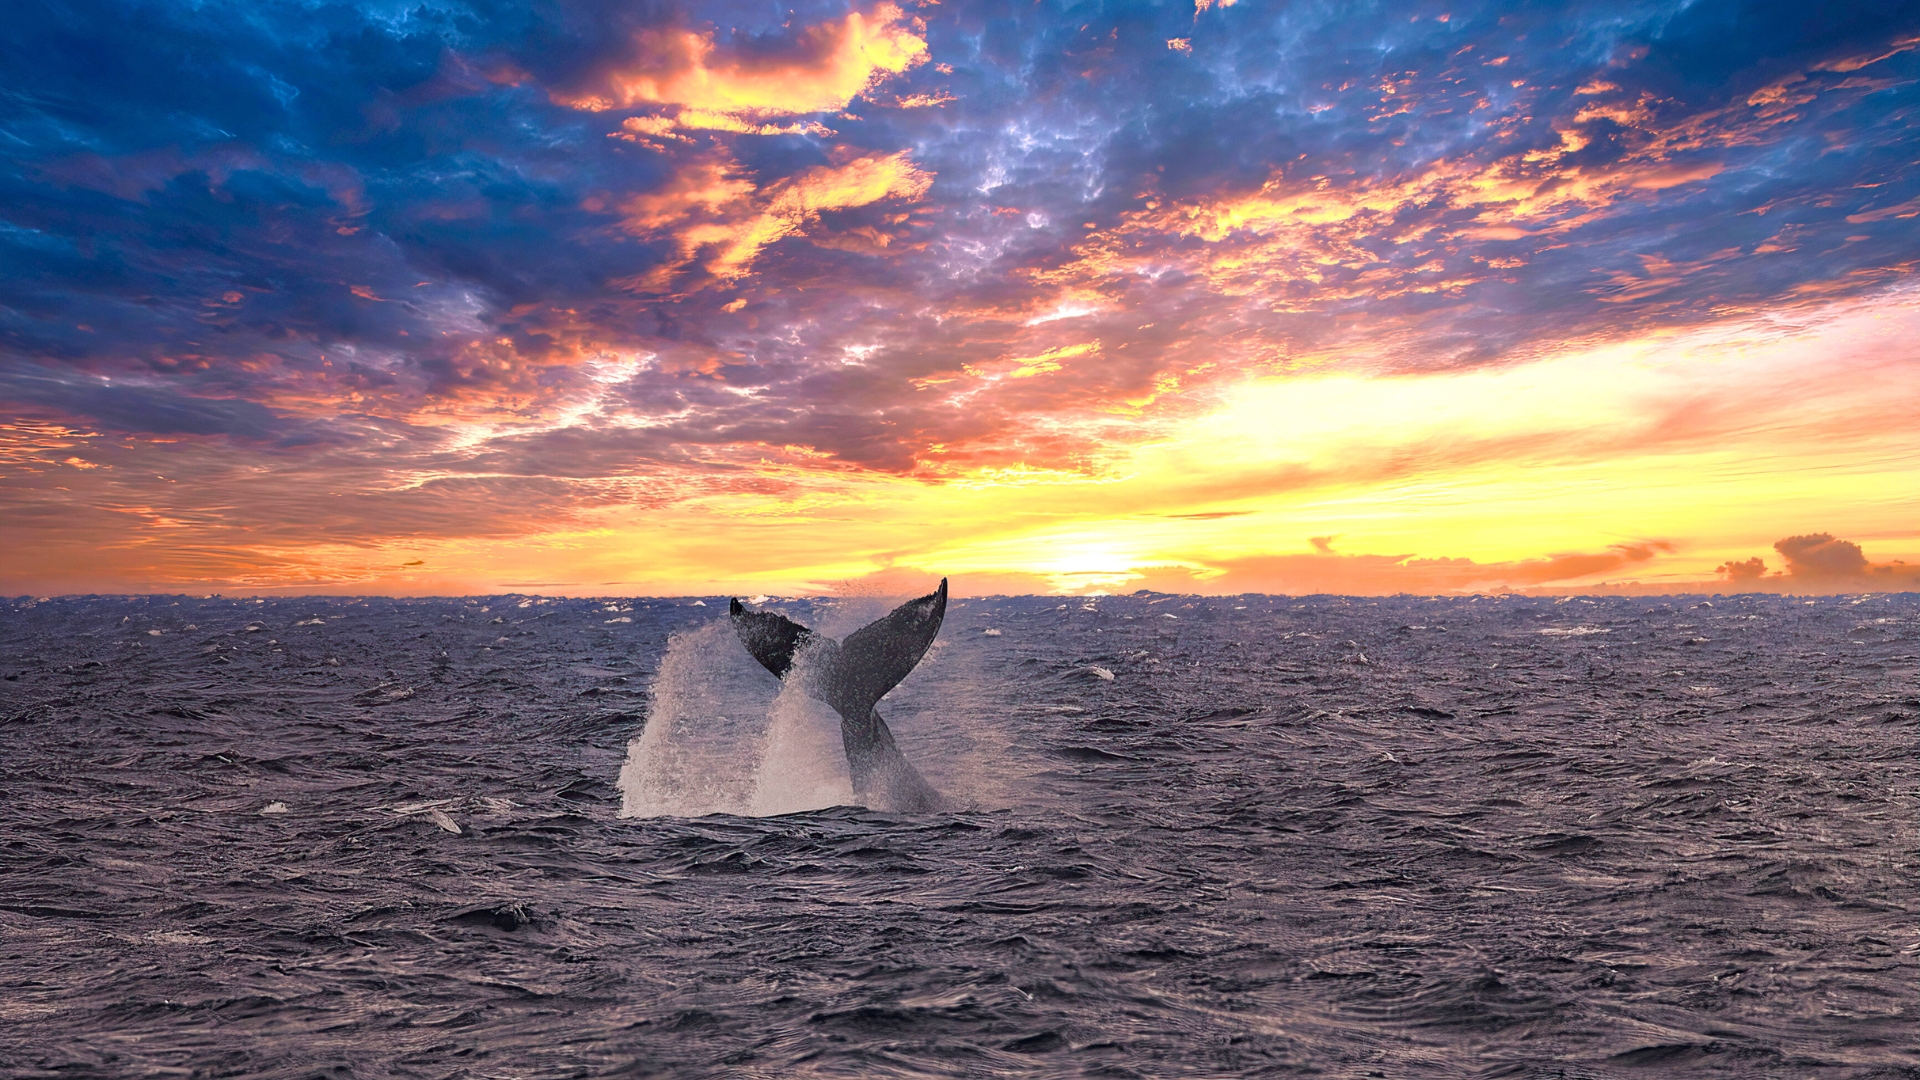 Whale Watching at Sunset - Oahu and Maui - Hawaii